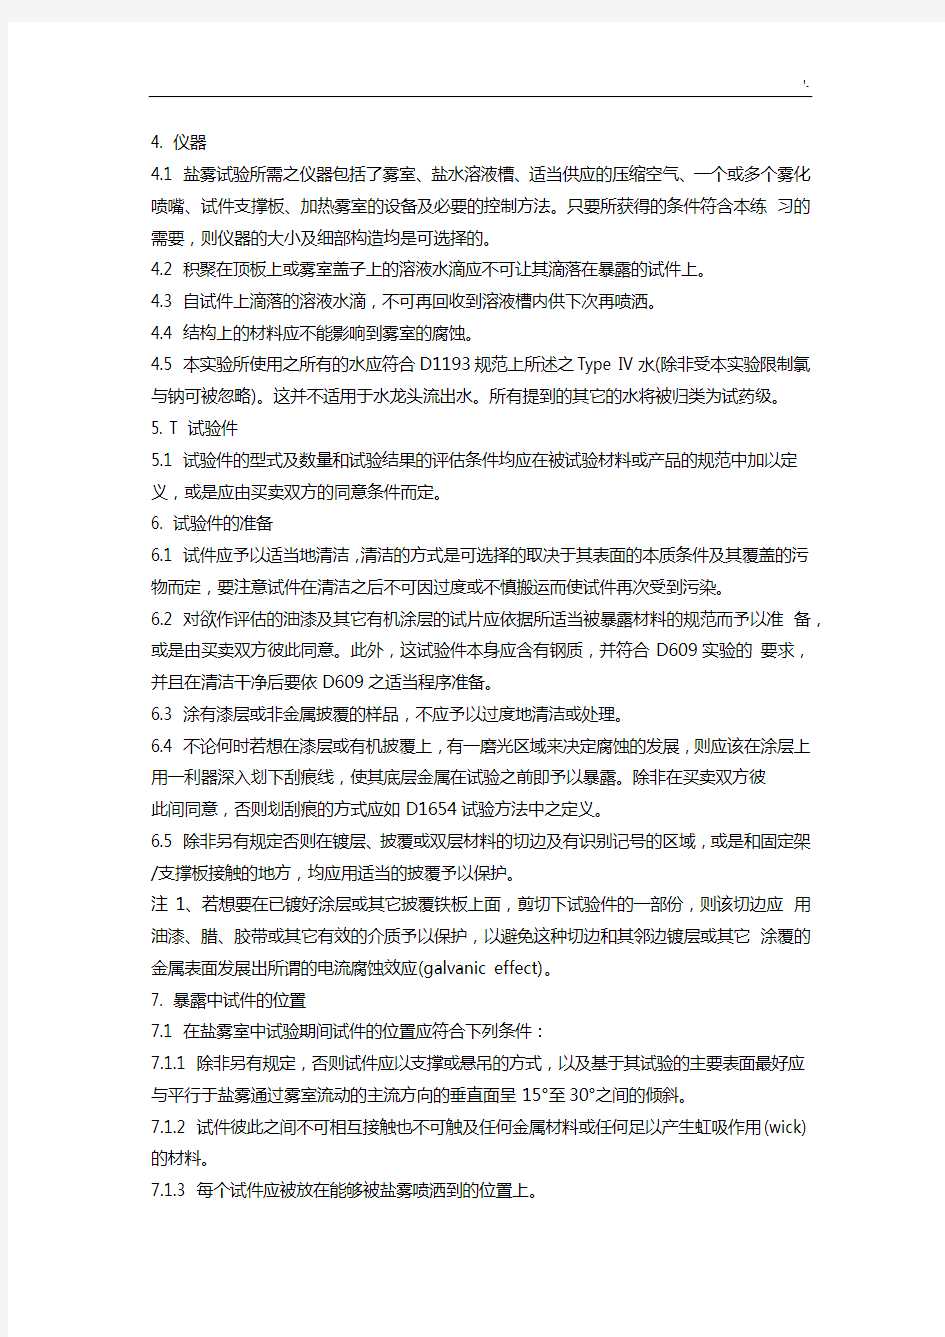 ASTMB1172011盐雾试验标准中文